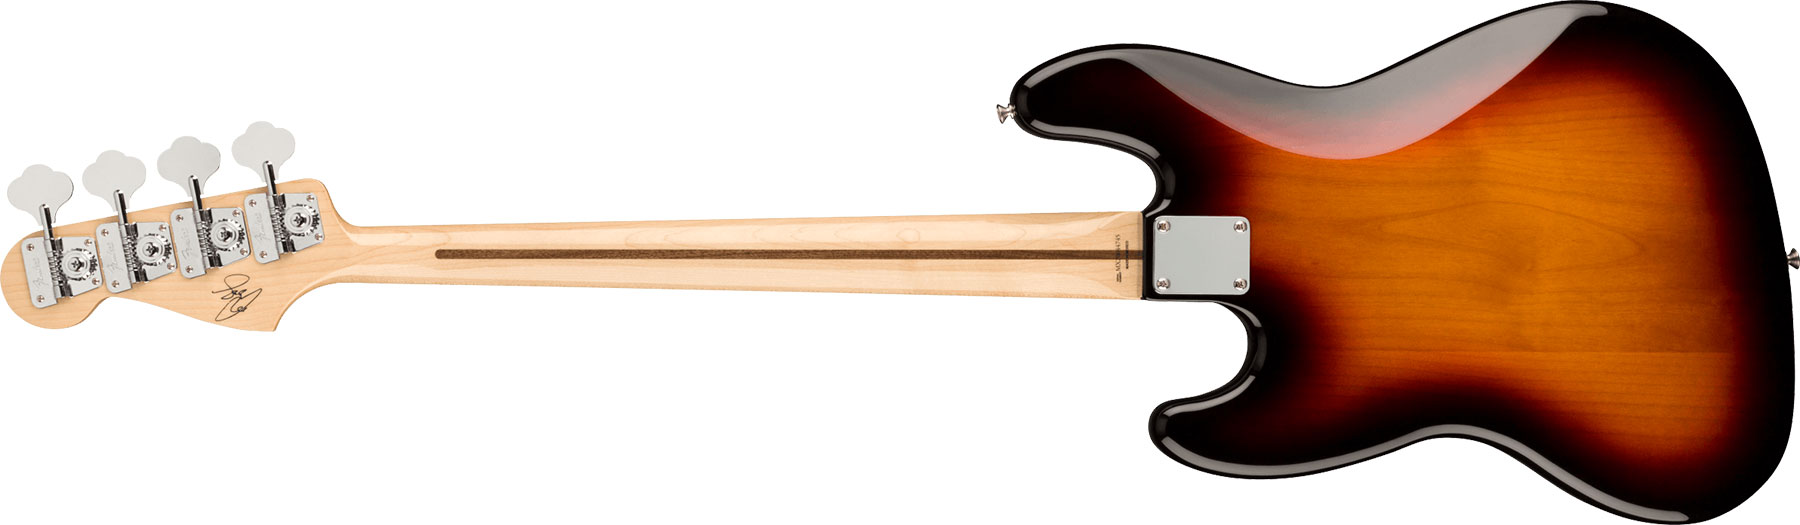 Fender Geddy Lee Jazz Bass Signature Mex Mn - 3-color Sunburst - Solidbody E-bass - Variation 1